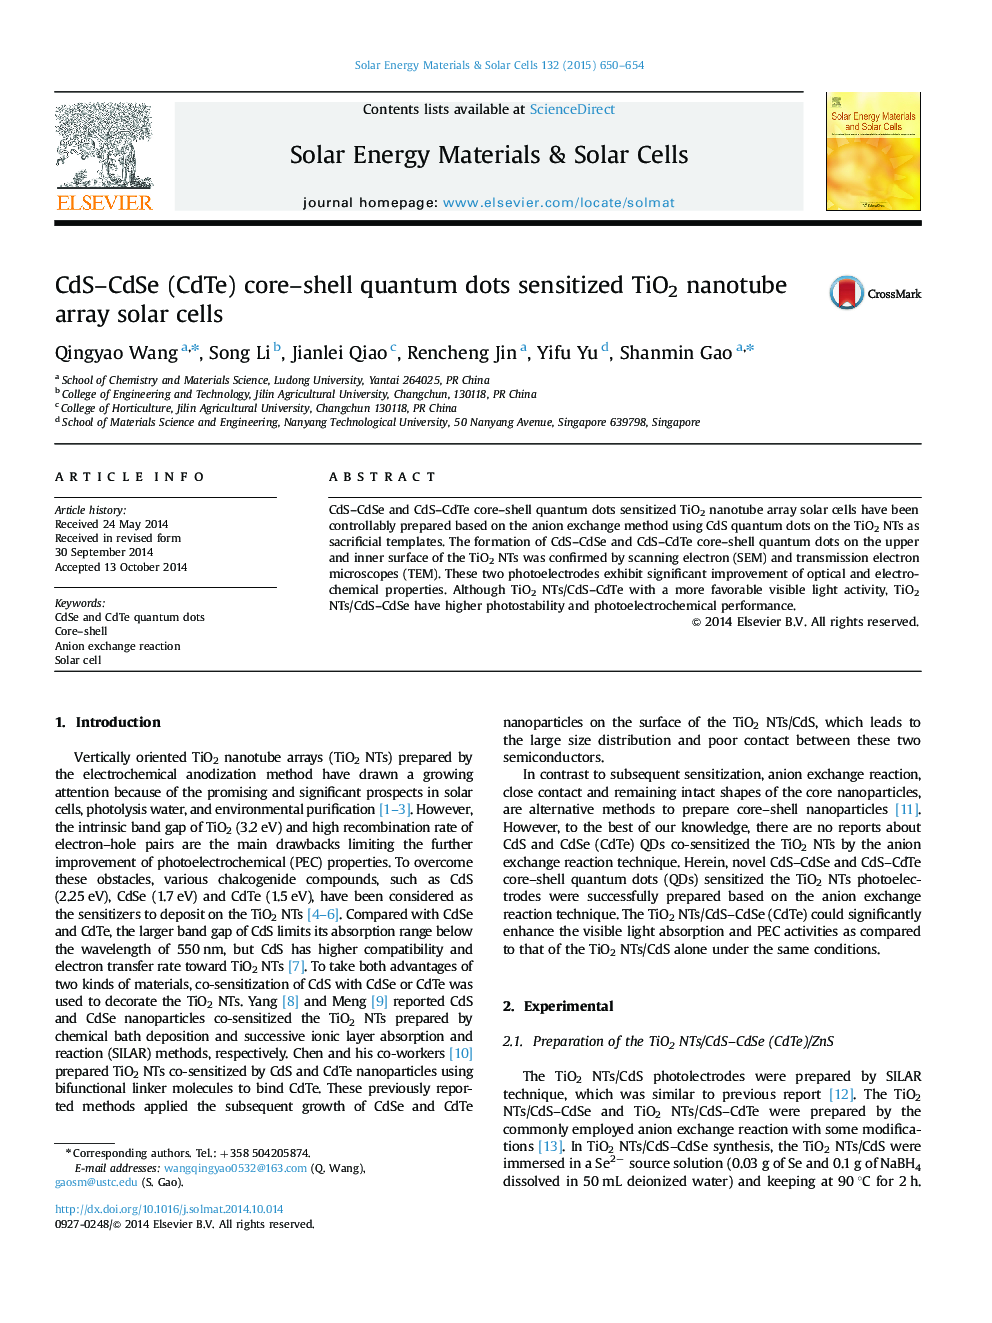 CdS-CdSe (CdTe) core-shell quantum dots sensitized TiO2 nanotube array solar cells